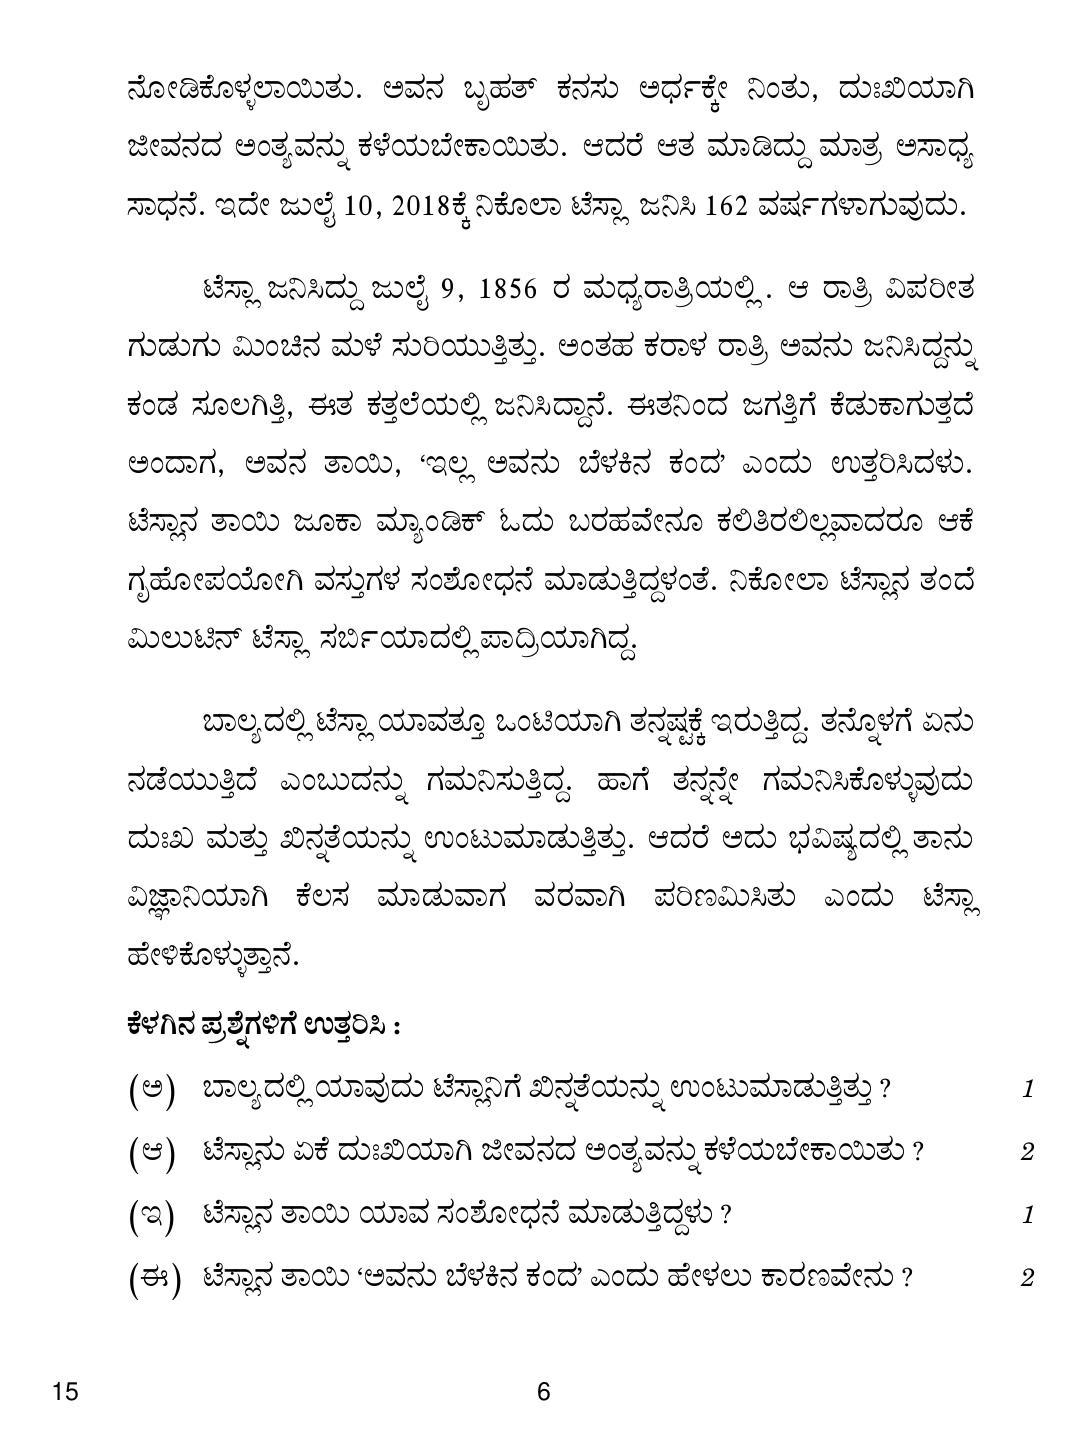 CBSE Class 12 15 Kannada 2018 Question Paper - Page 6